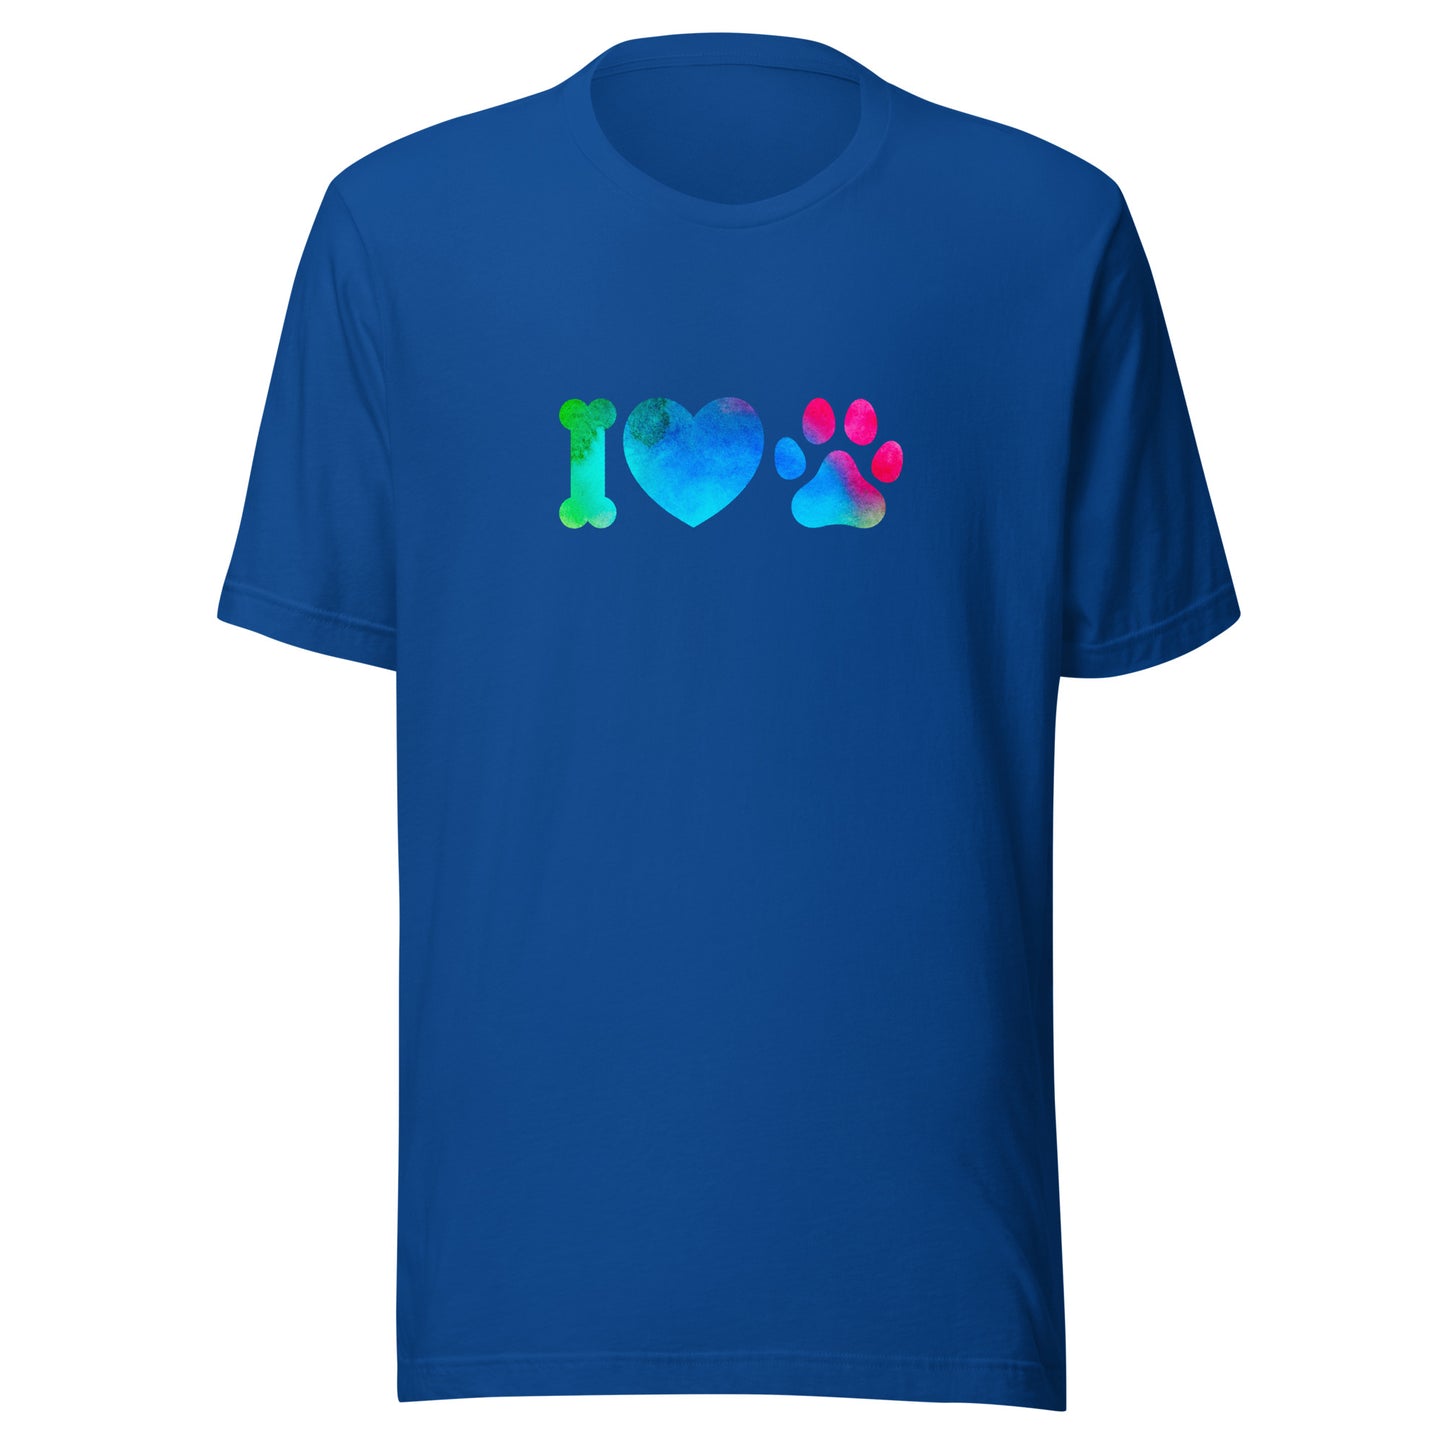 "I Love Dogs" Unisex T-Shirt